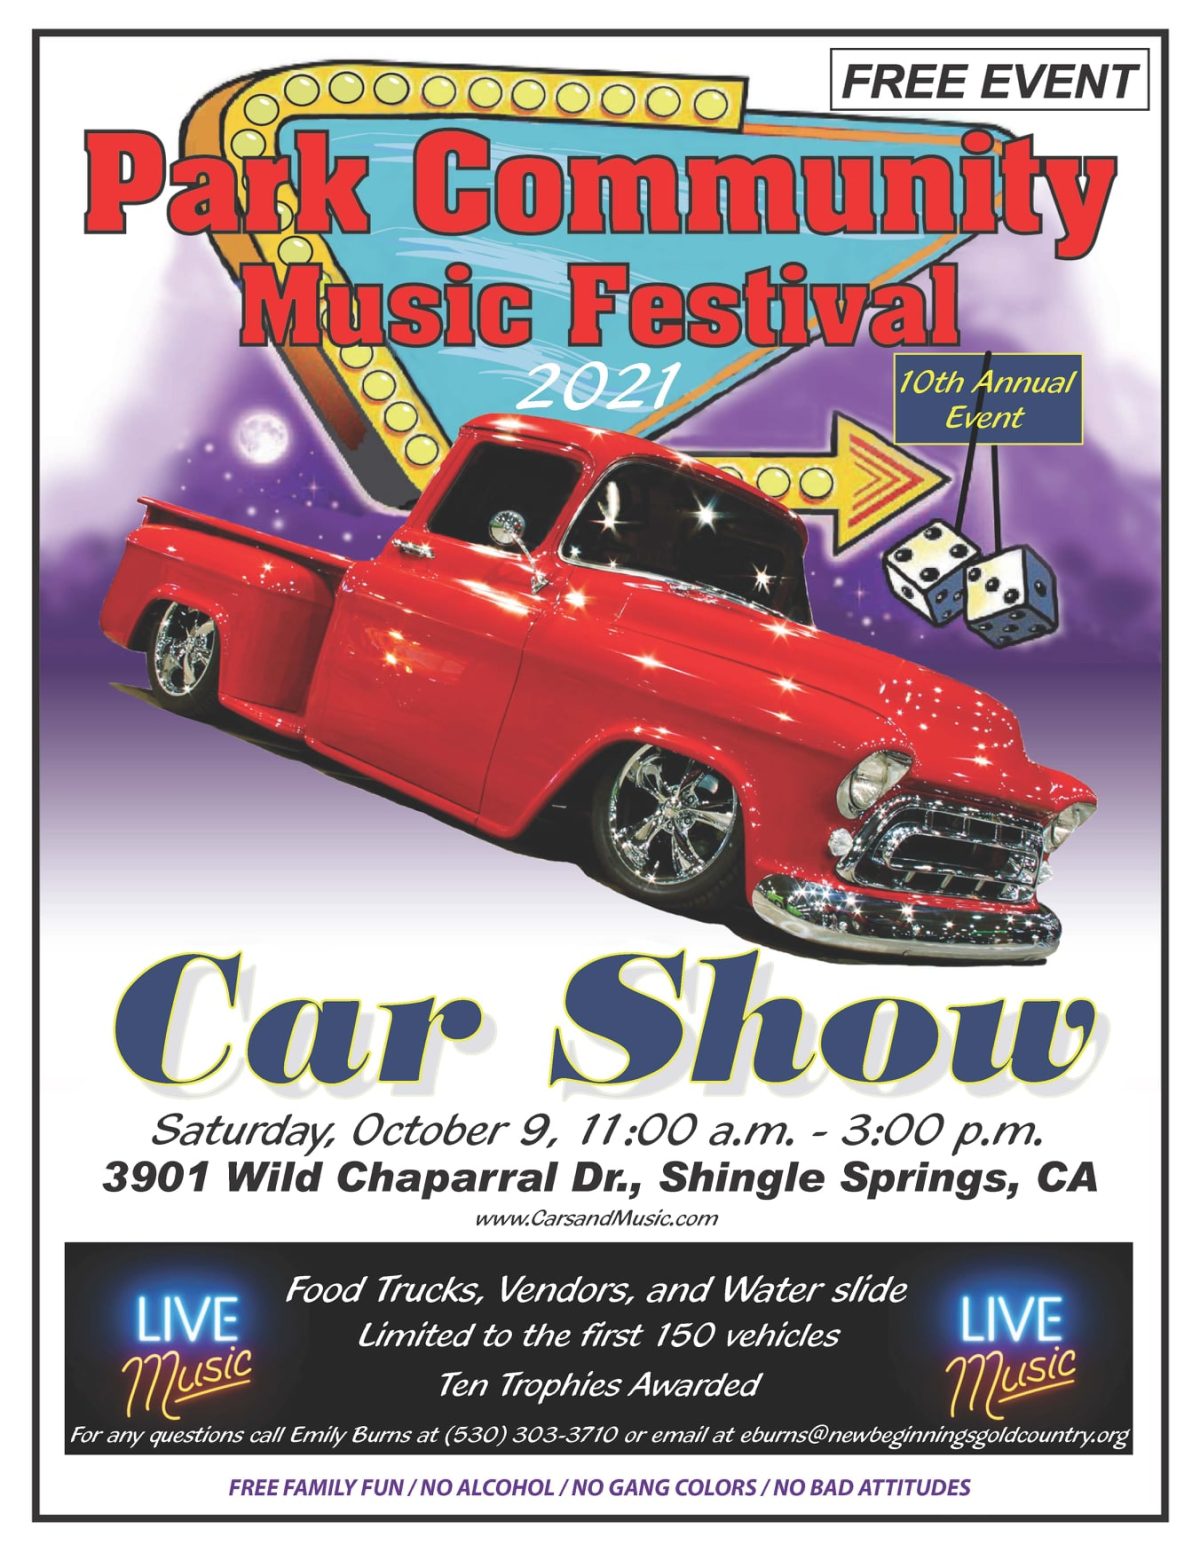 10th Annual Park Community Music Festival & Car Show